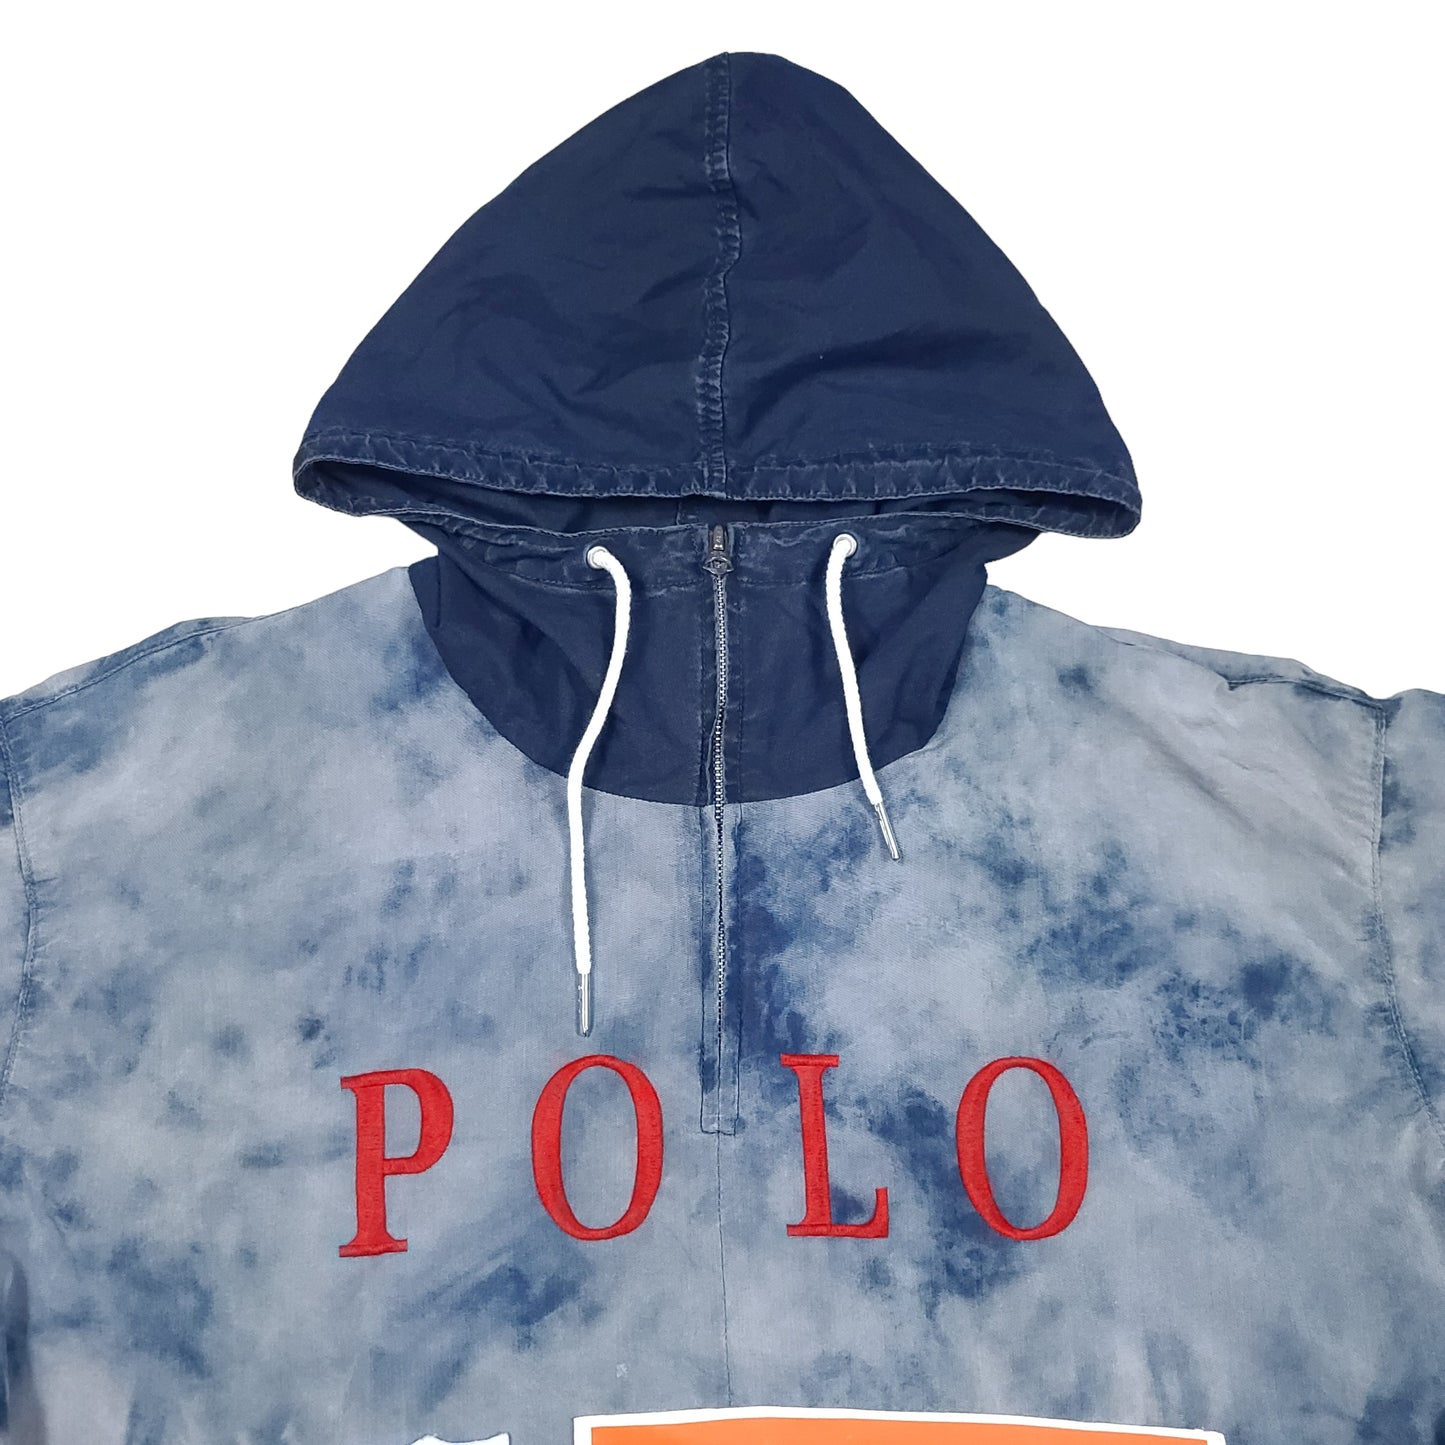 Polo Ralph Lauren Stadium 1992 Limited Edition Indigo Pullover Jacket